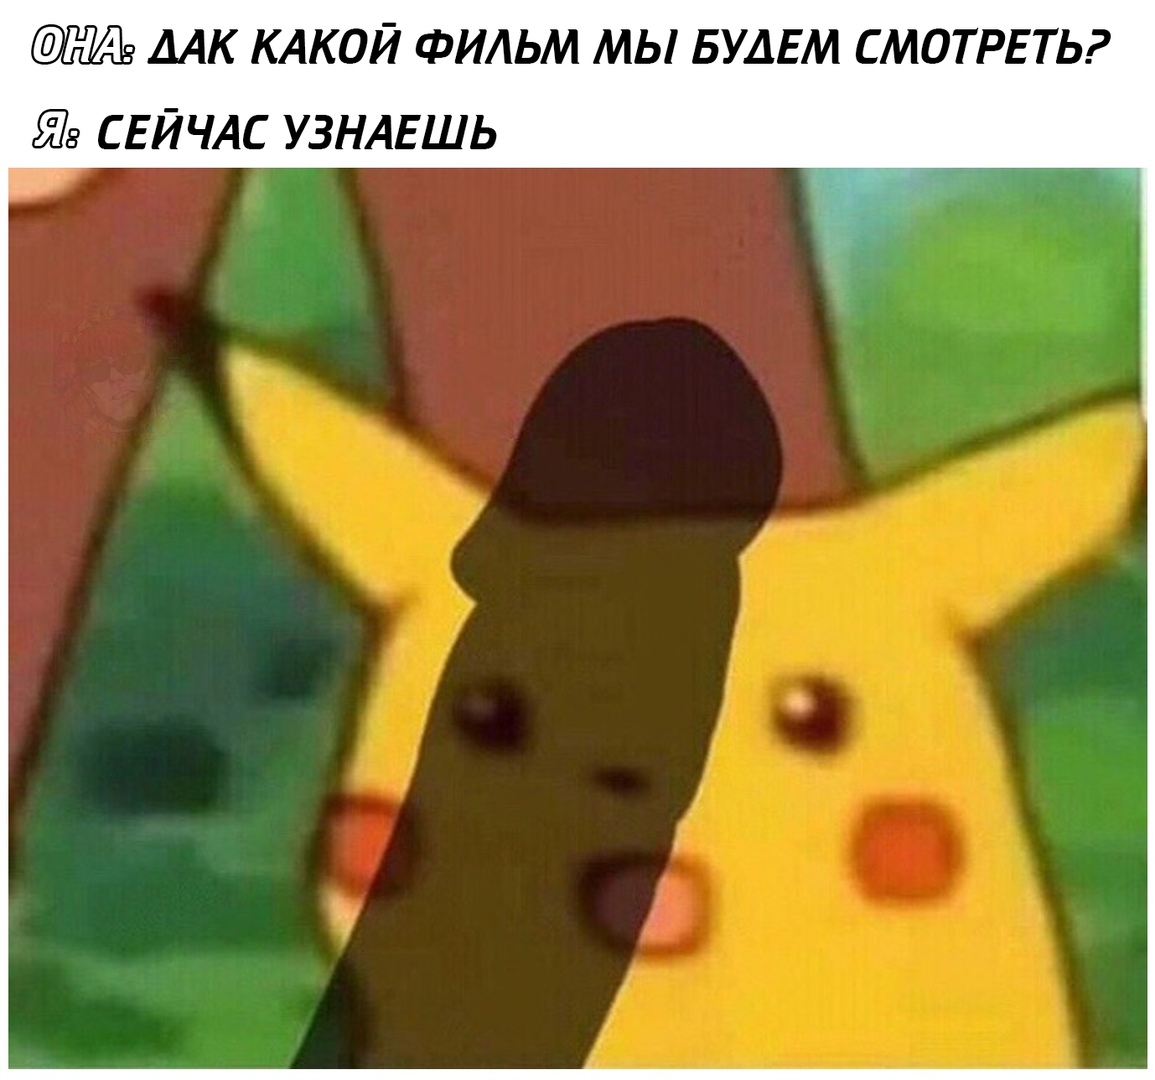 Pikachu dick flex meme